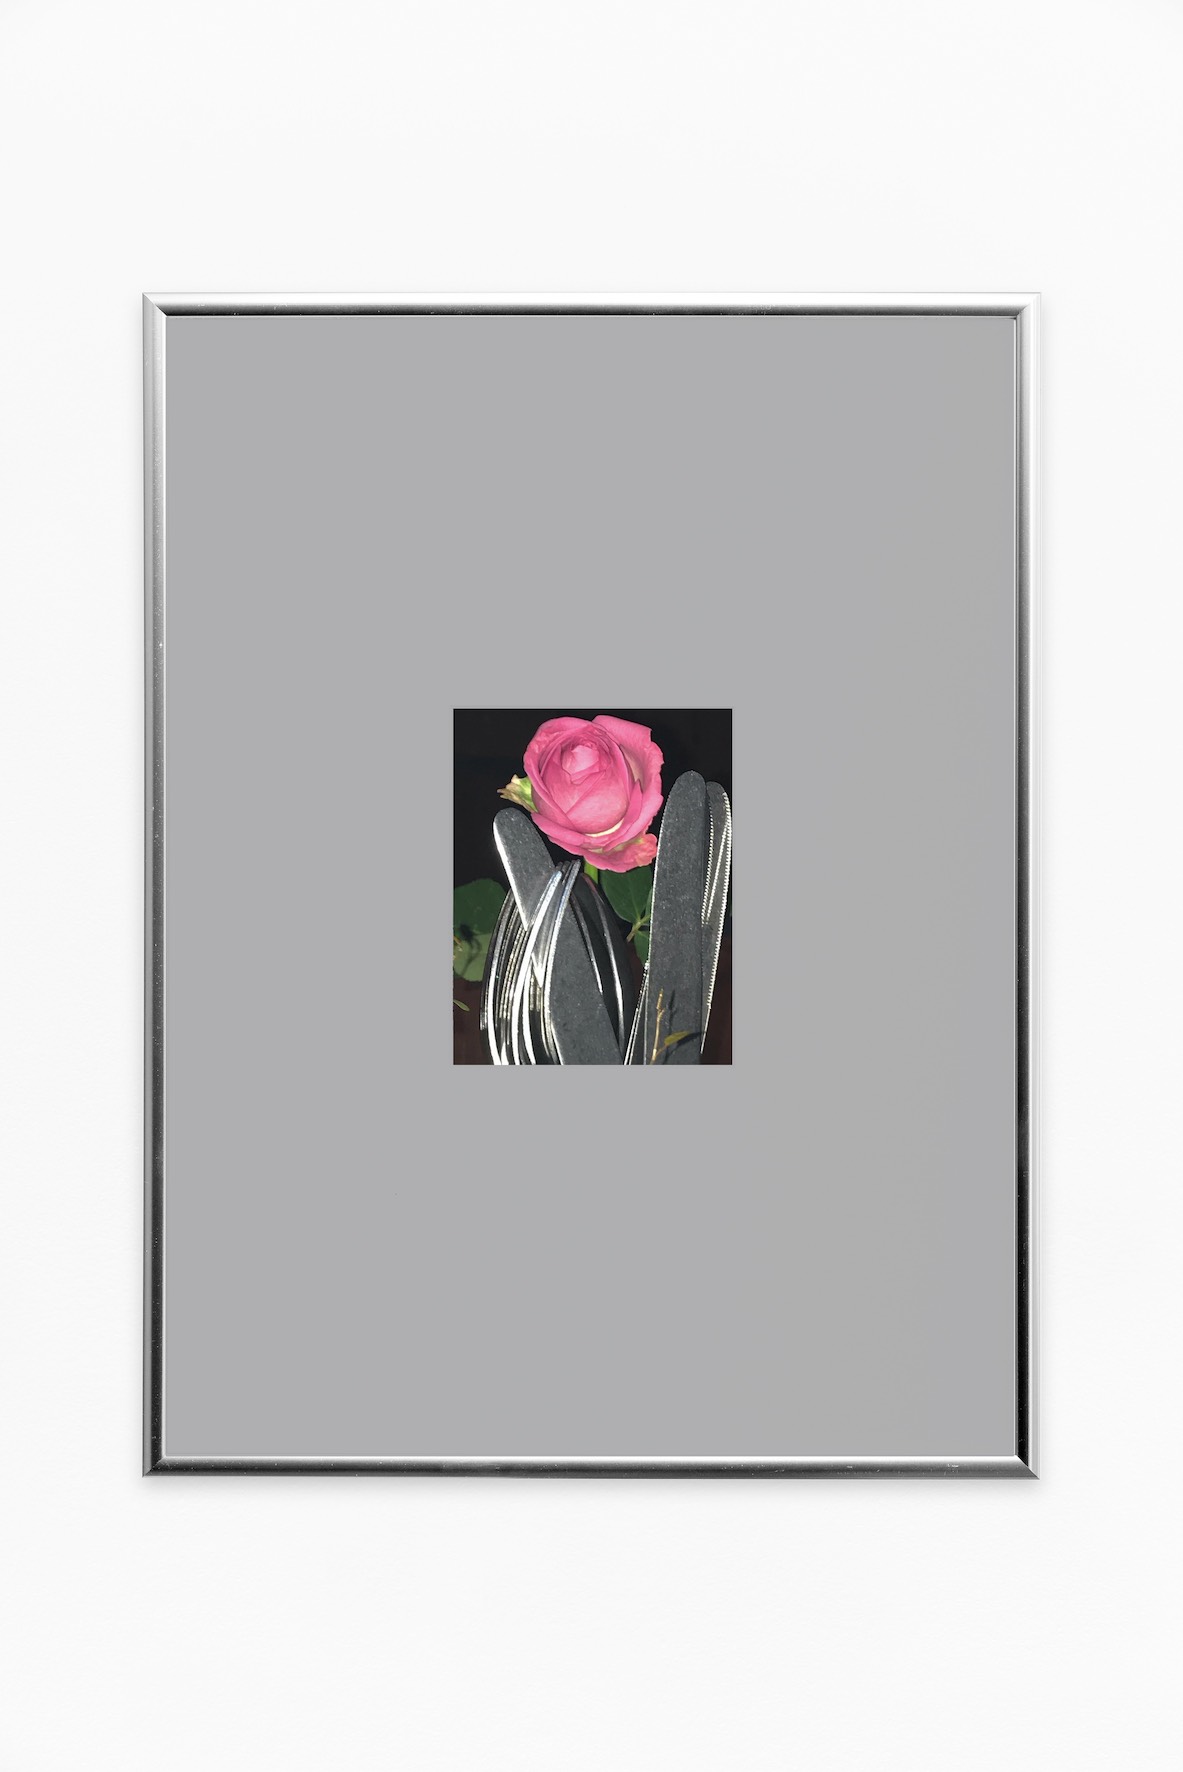 Raring, 2018, c-print on baryta Hahnemühle paper, silver aluminium frame, cm. 12,5 x 10 (print); cm. 40 x 30 (frame)